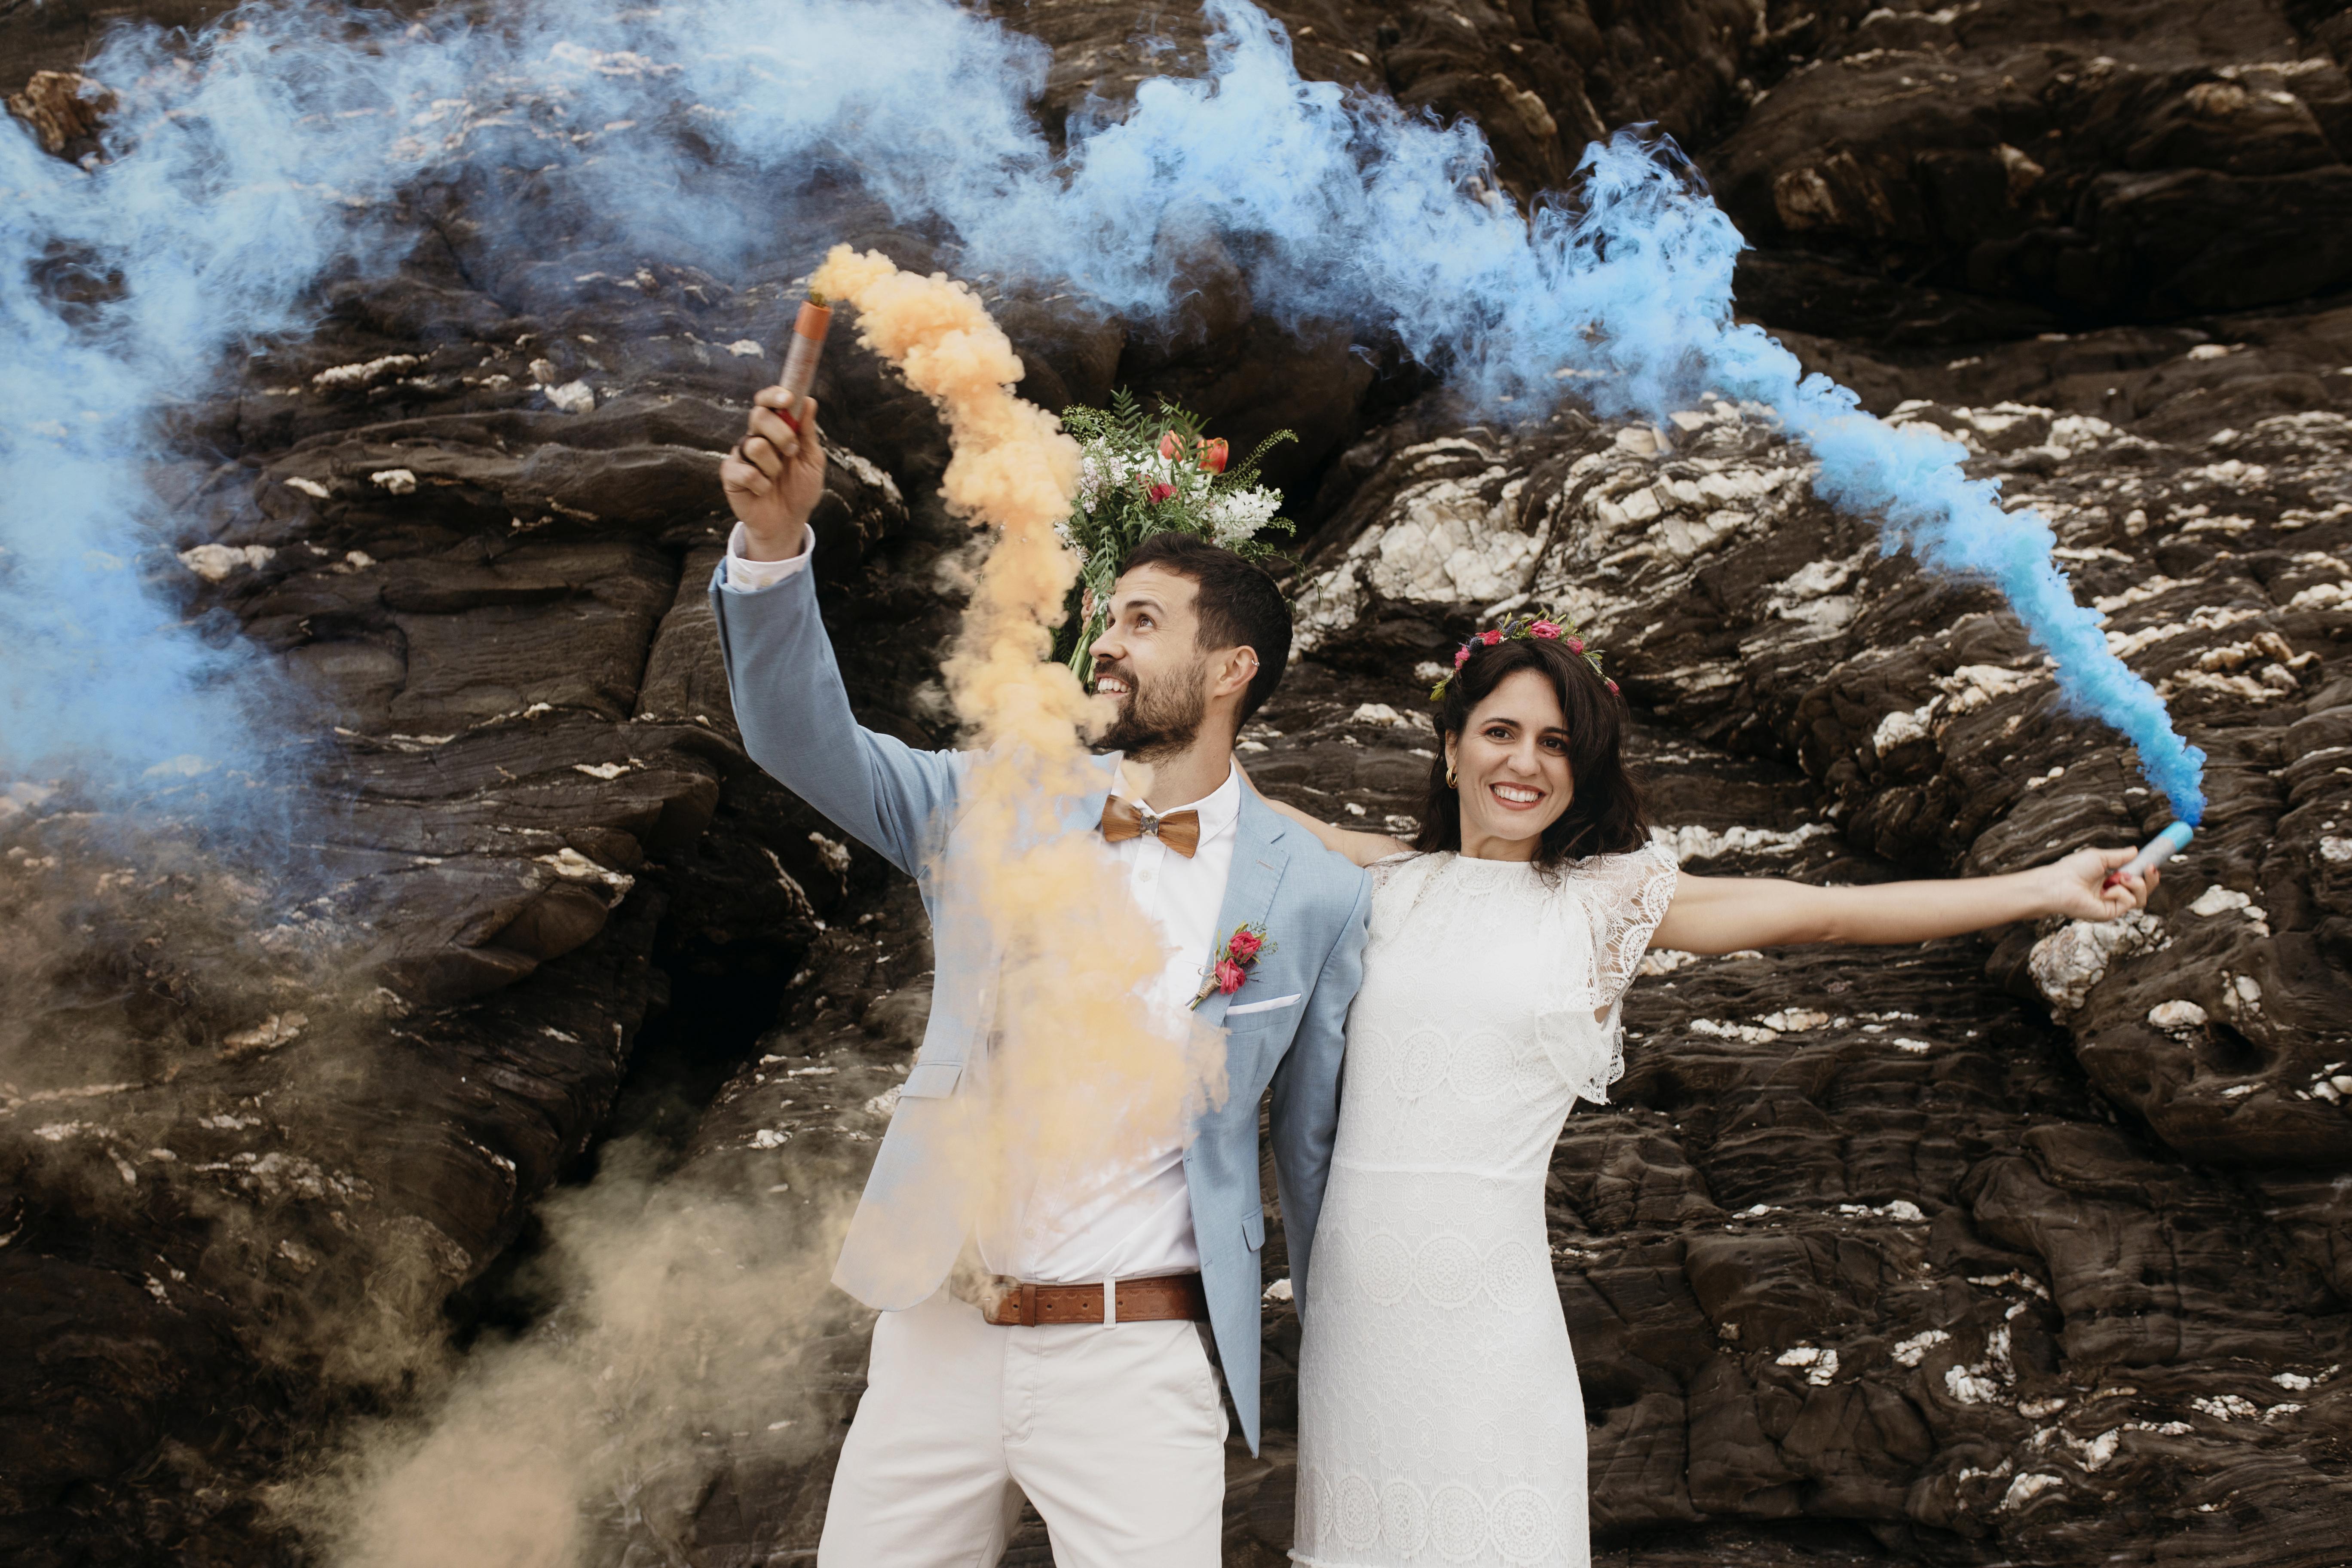 Best Pre Wedding Photoshoot in Bangalore - Picture Quotient